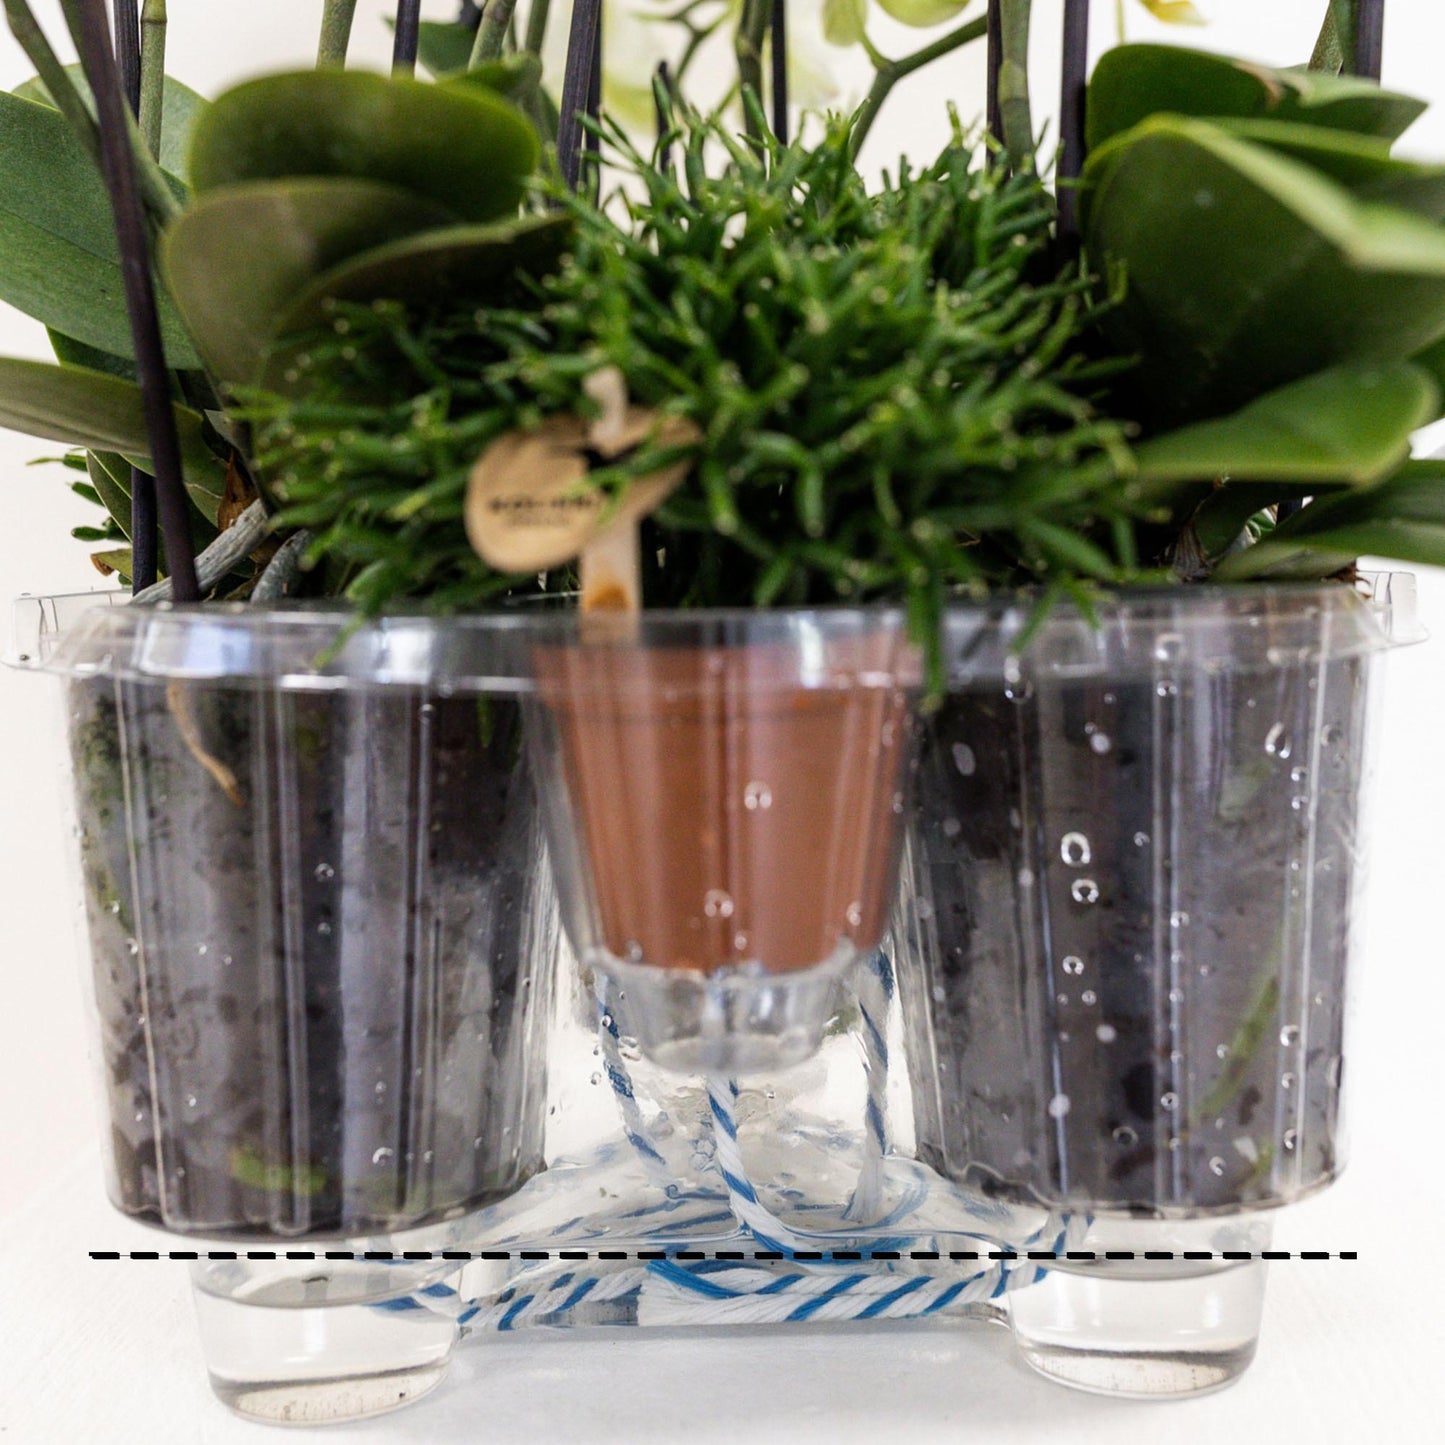 Kolibri Orchids | witte orchideeënset in Reed Basket incl. waterreservoir | drie gebogen witte orchideeën Niagara Fall 12cm | Mono Bouquet wit met zelfvoorzienend waterreservoir